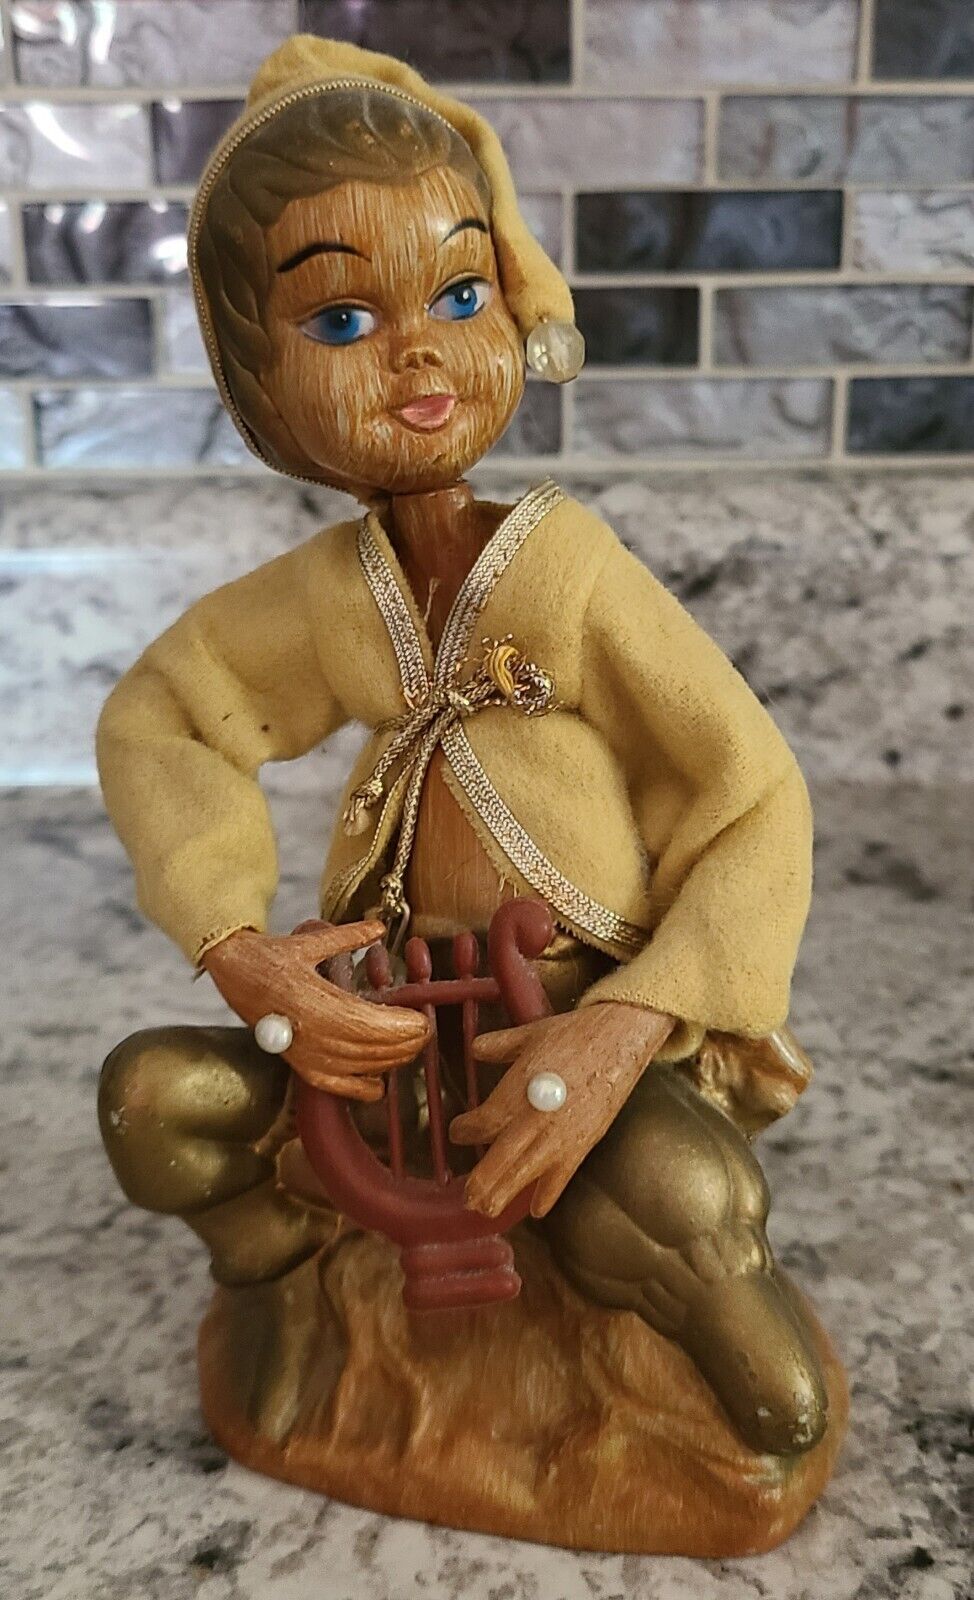 Vintage Golden Fantasy Elf Pixie Playing a Harp Christmas Figurine